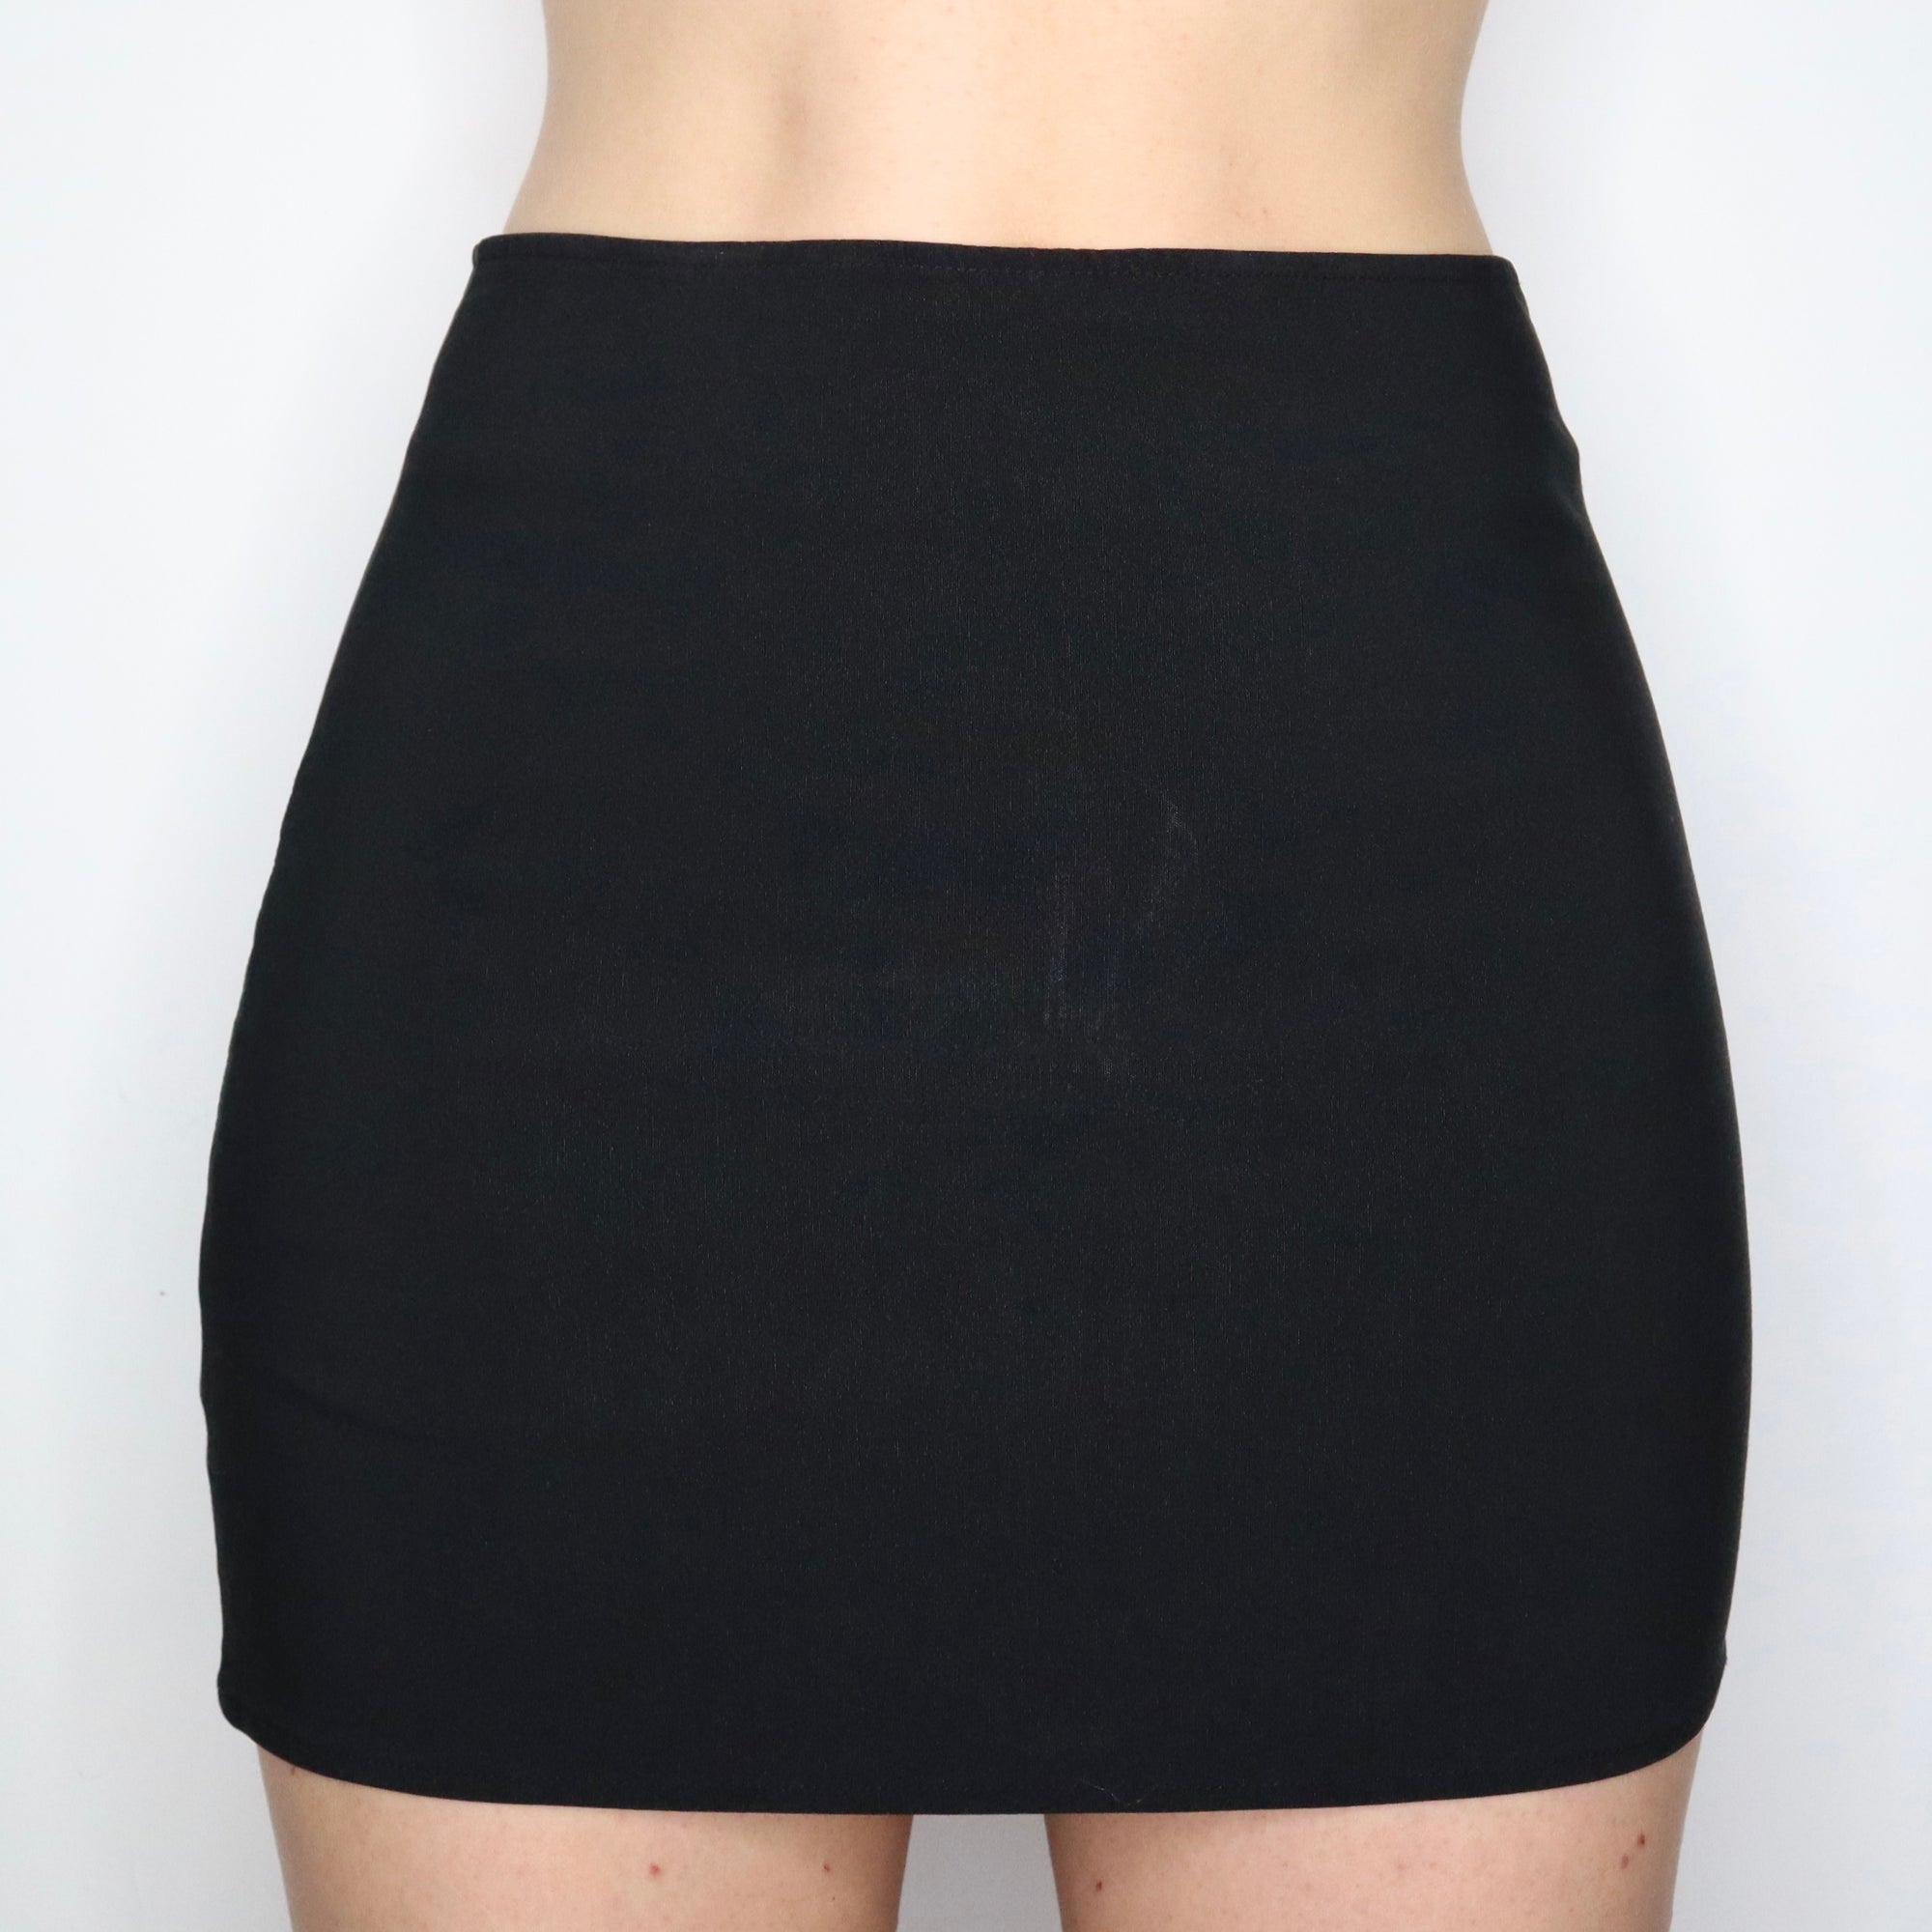 Vintage Early 2000s Black Mini Skirt